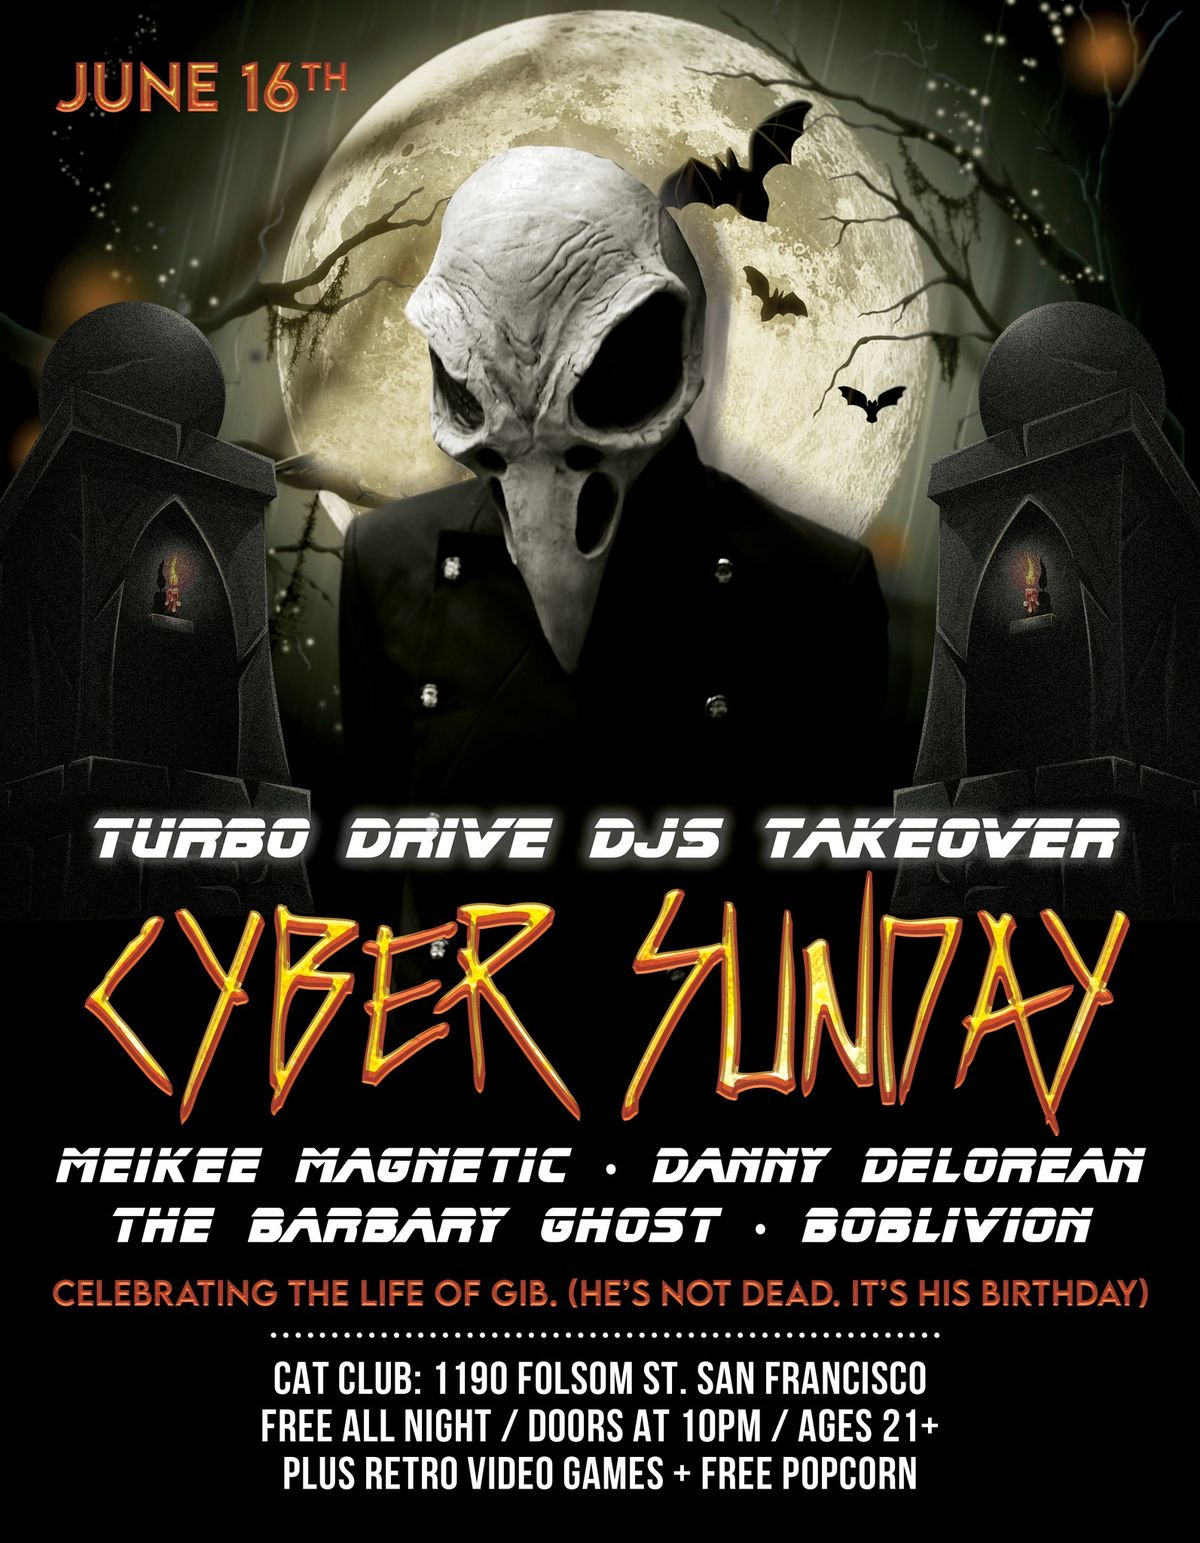 6\/16: Turbo Drive Crew takes over Cyber Sunday for Gib's Birthday! FREE, 4 DJs, retro games, popcorn